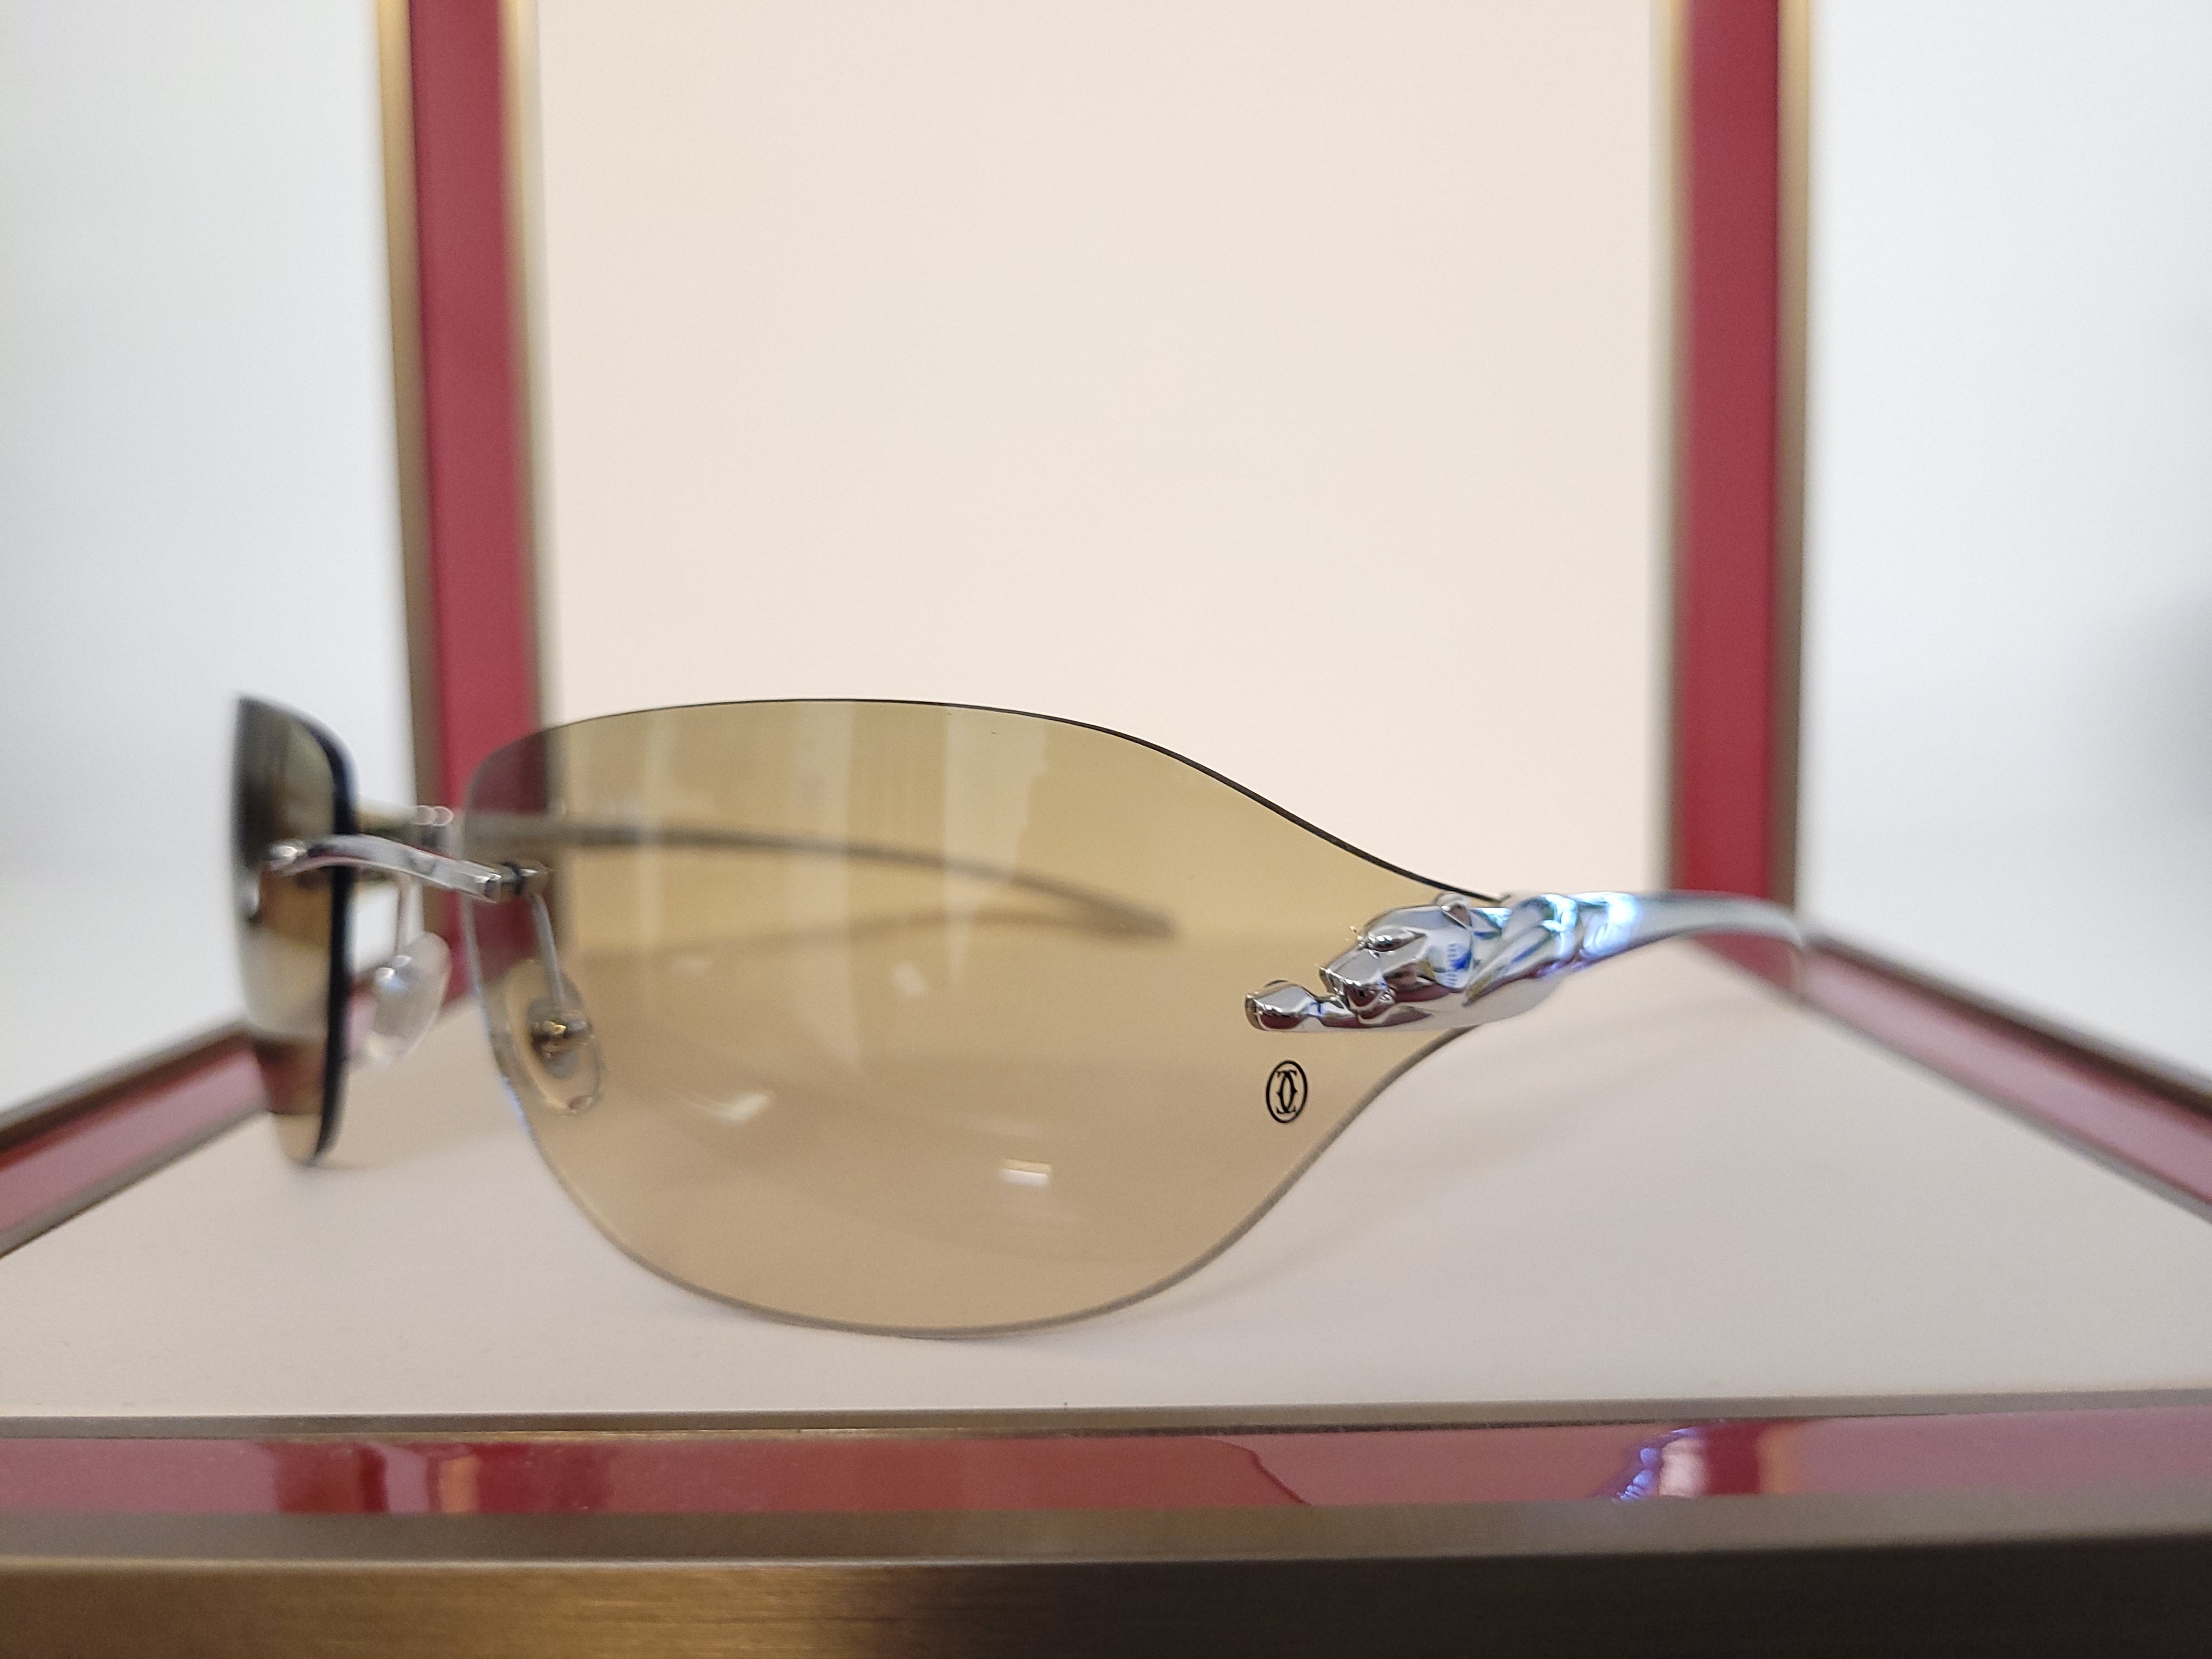 Sunglasses Cartier Tank - M Platinum Finish Green Lenses